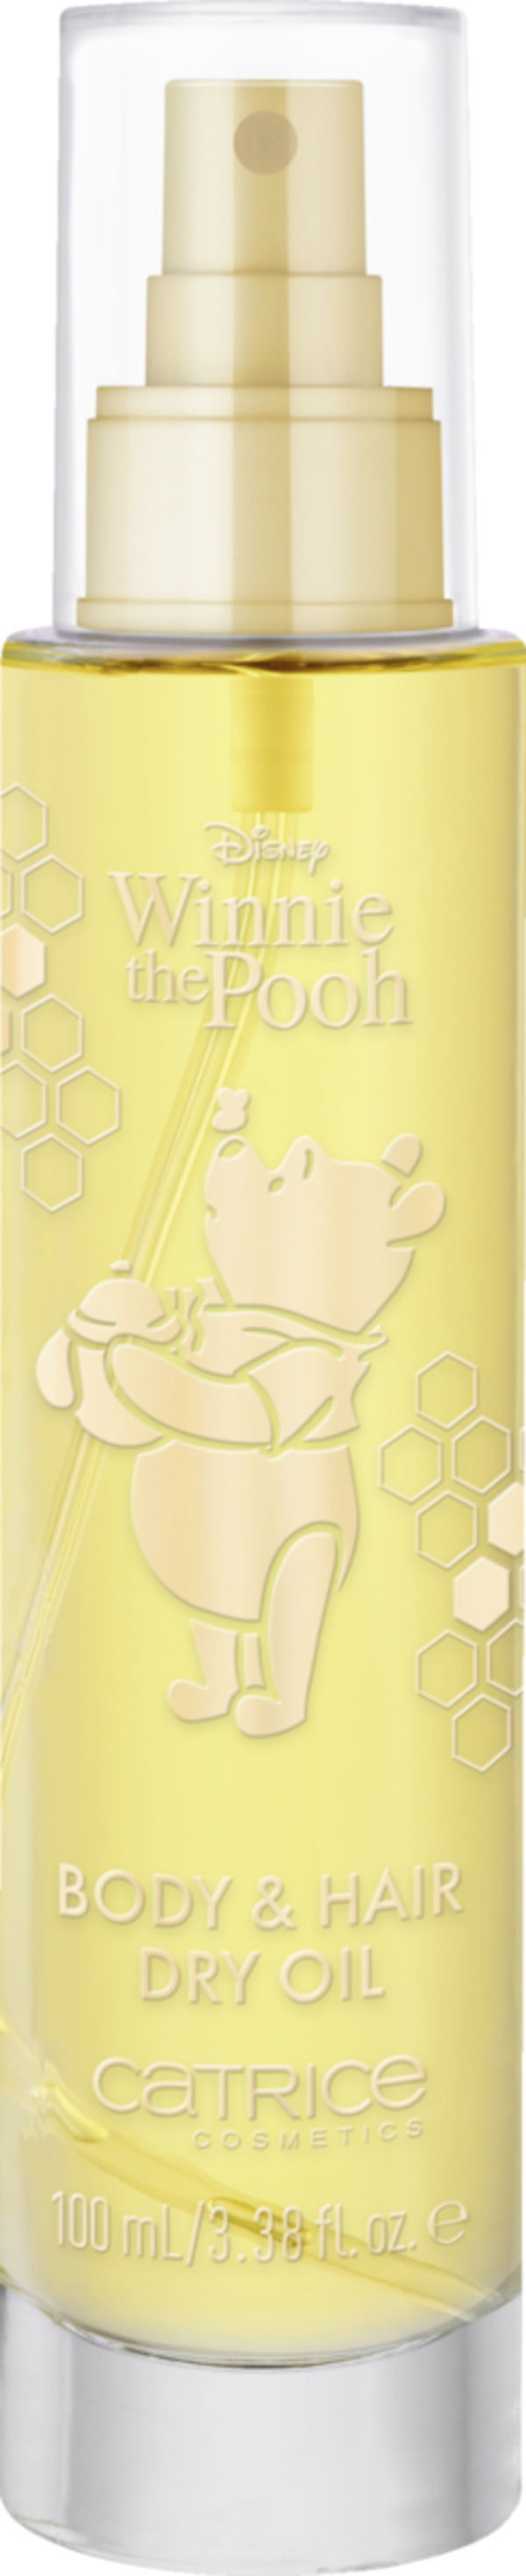 Bild 1 von Catrice Disney Winnie the Pooh Body and Hair Dry Oil 010 Hug It Out